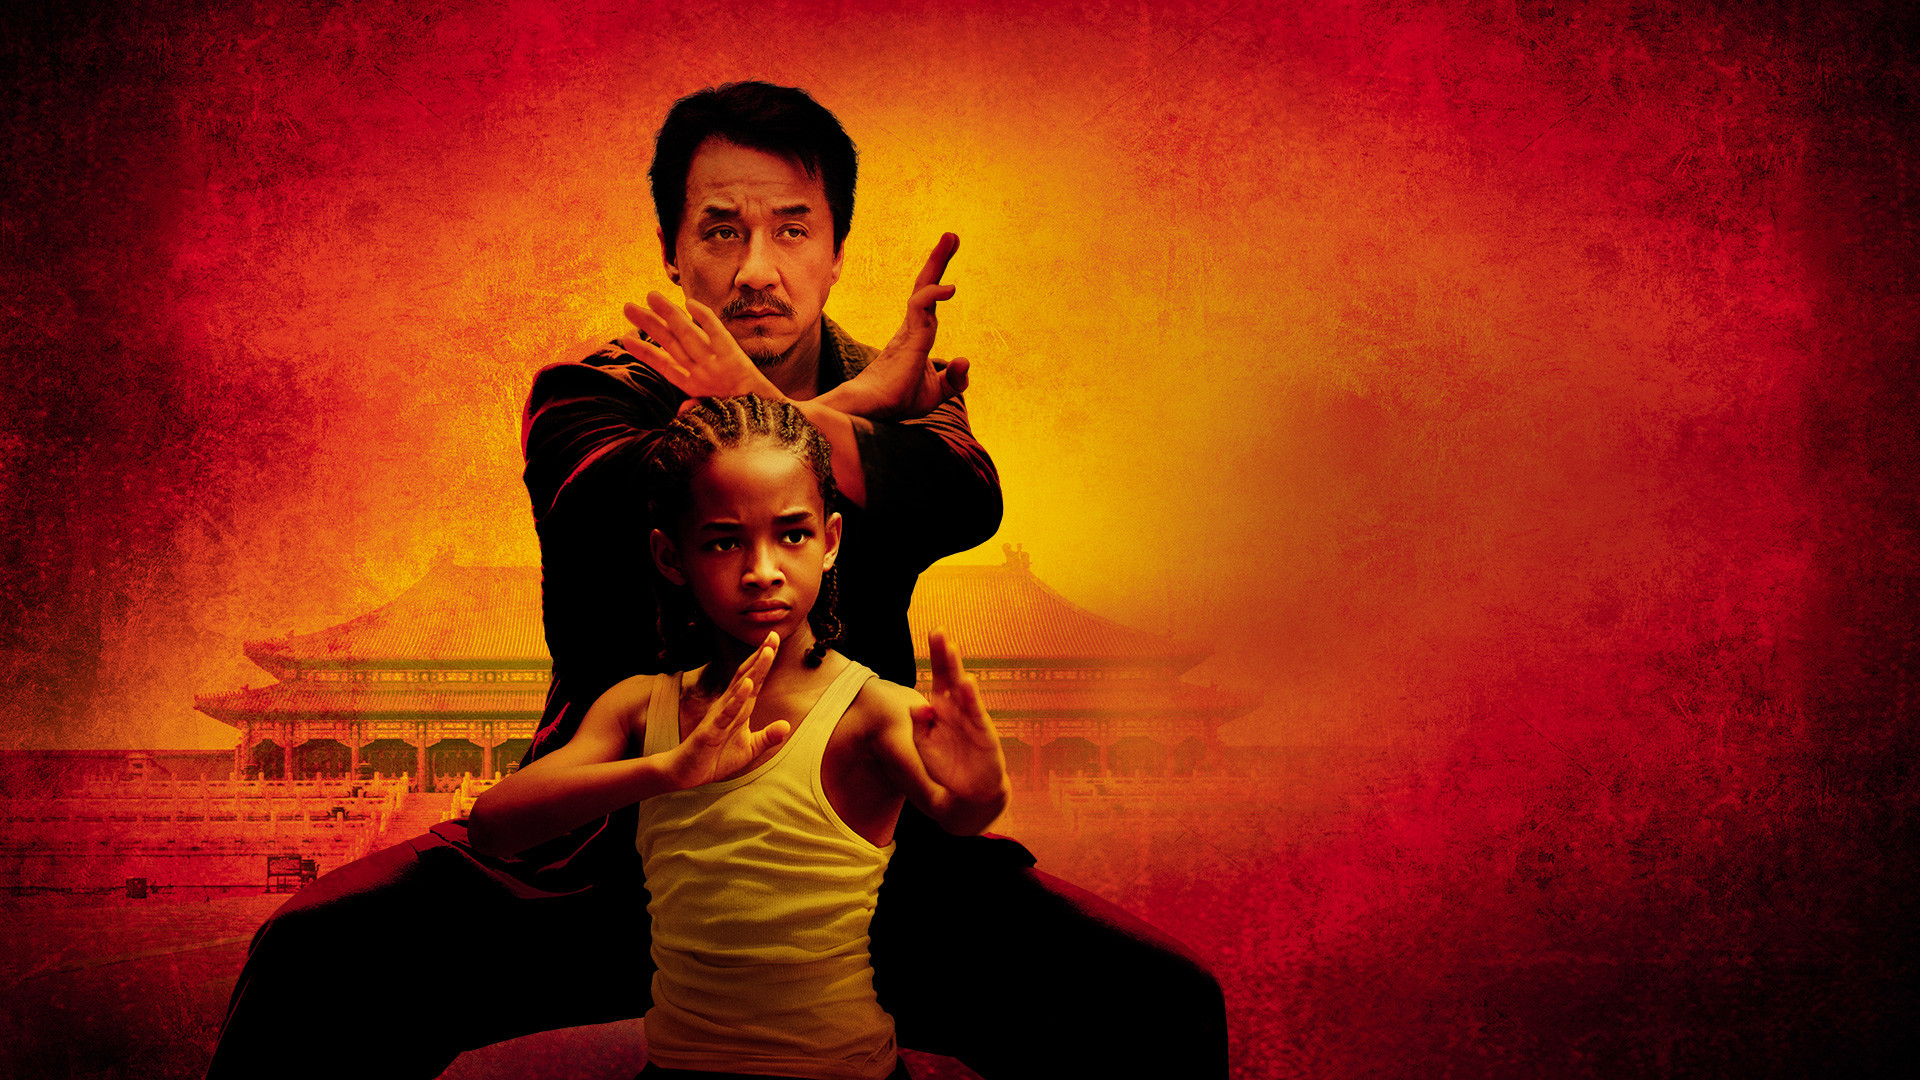 the karate kid full movie28201029 720p download